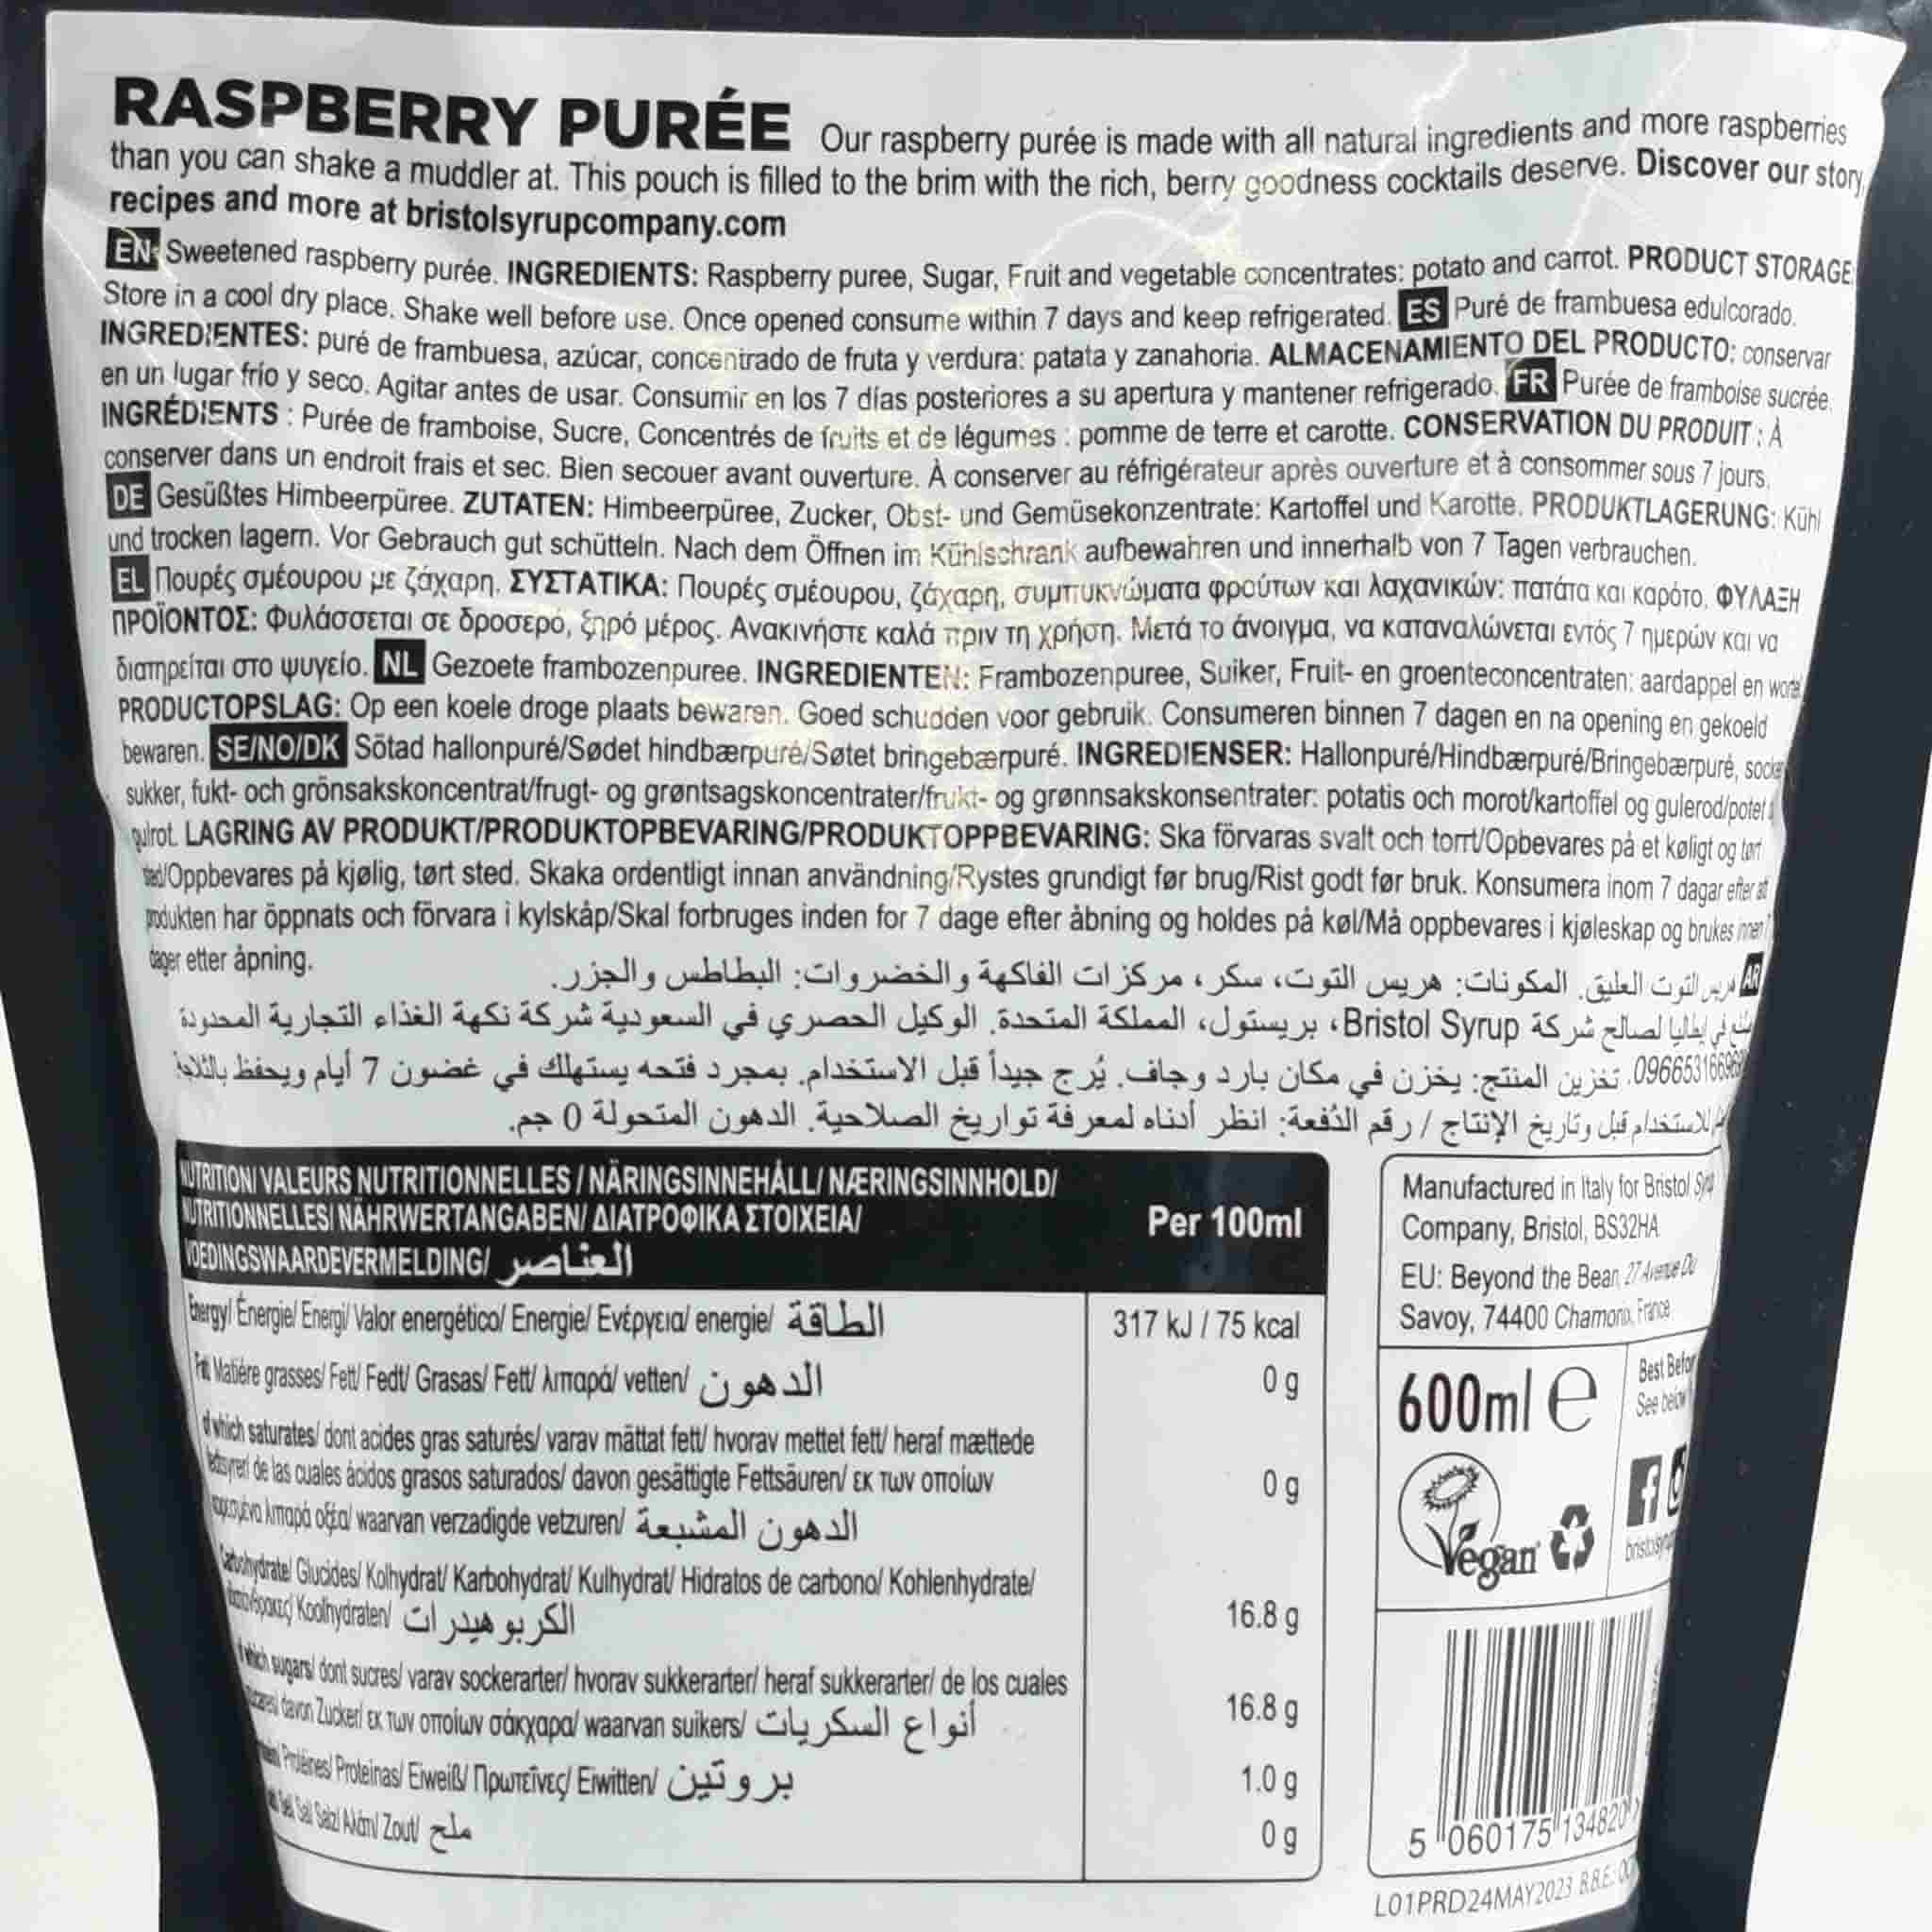 Bristol Syrup Co Raspberry Puree, 600ml